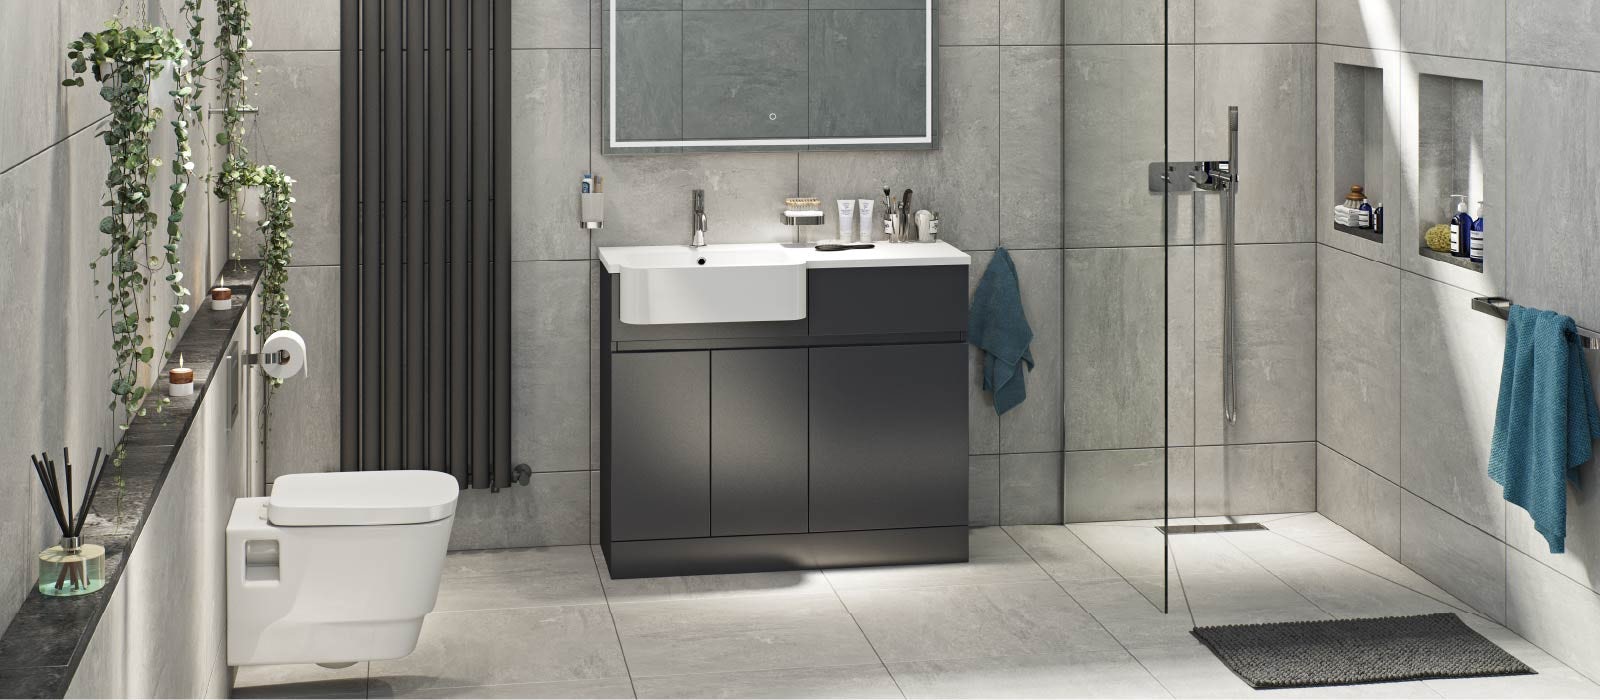 40 Luxury Modern Bathroom Design Ideas | Engineering Discoveries